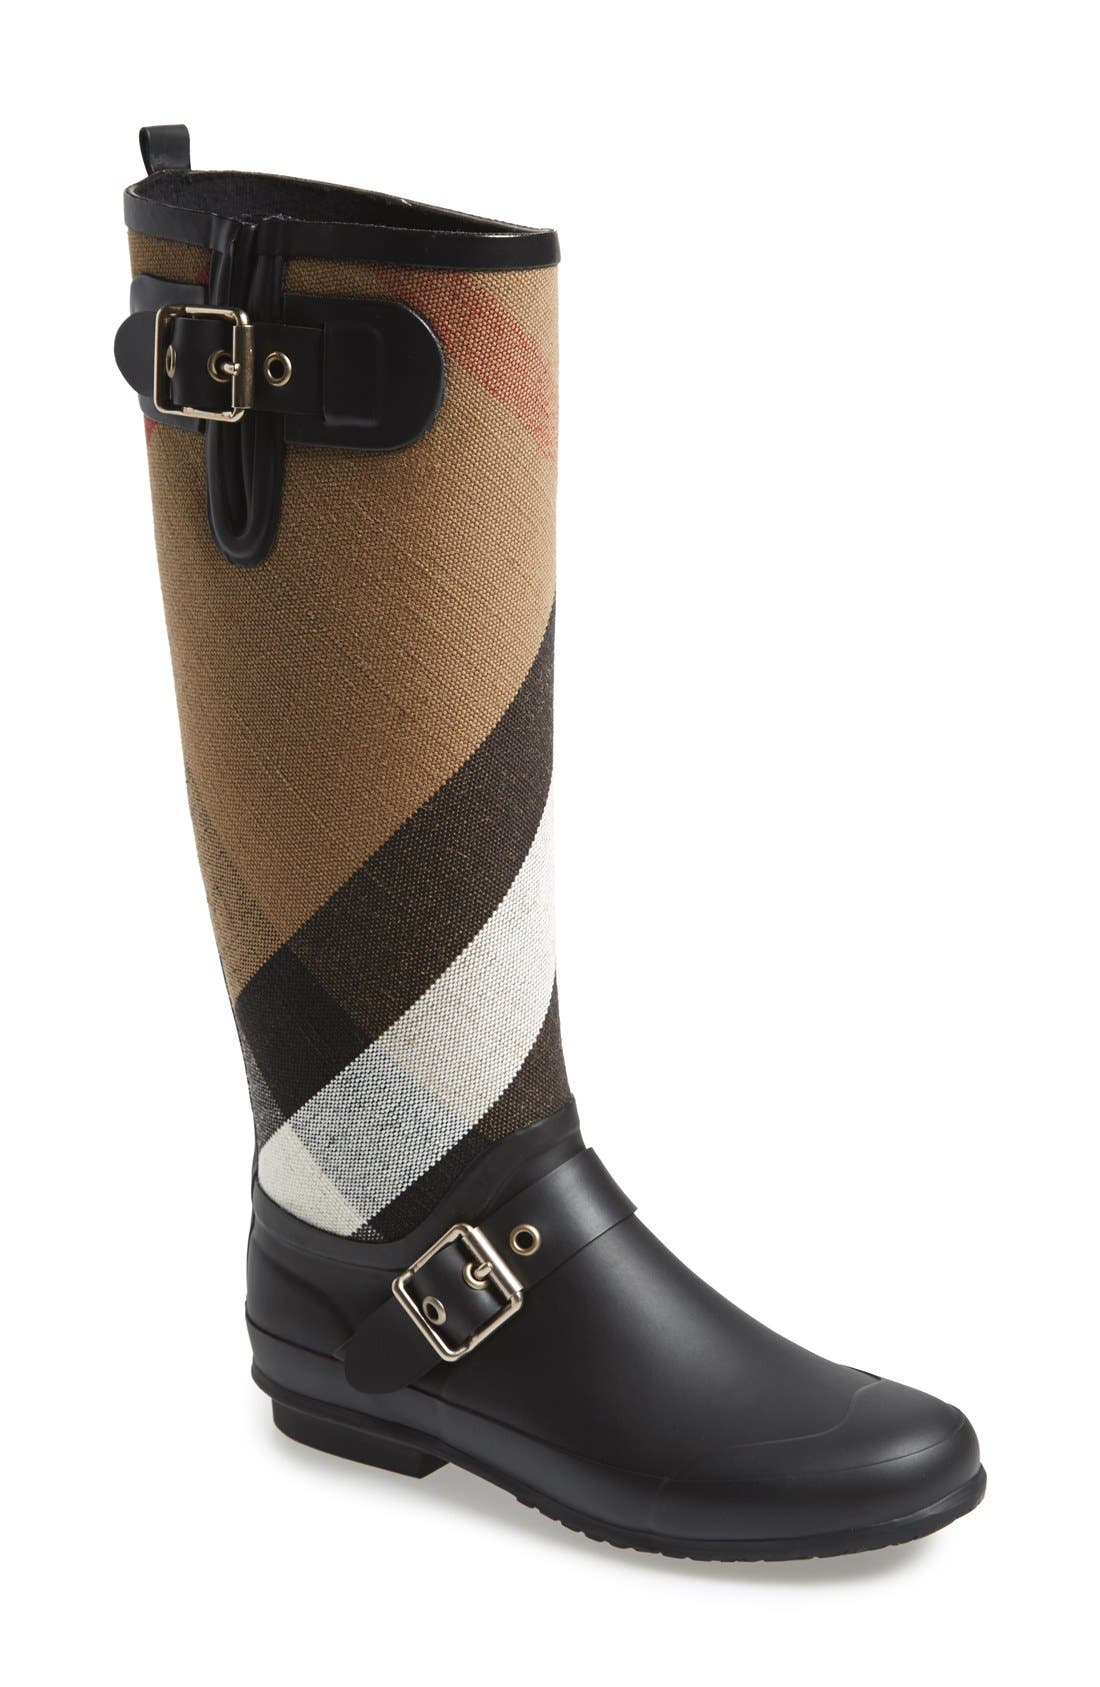 burberry rain boots wide calf